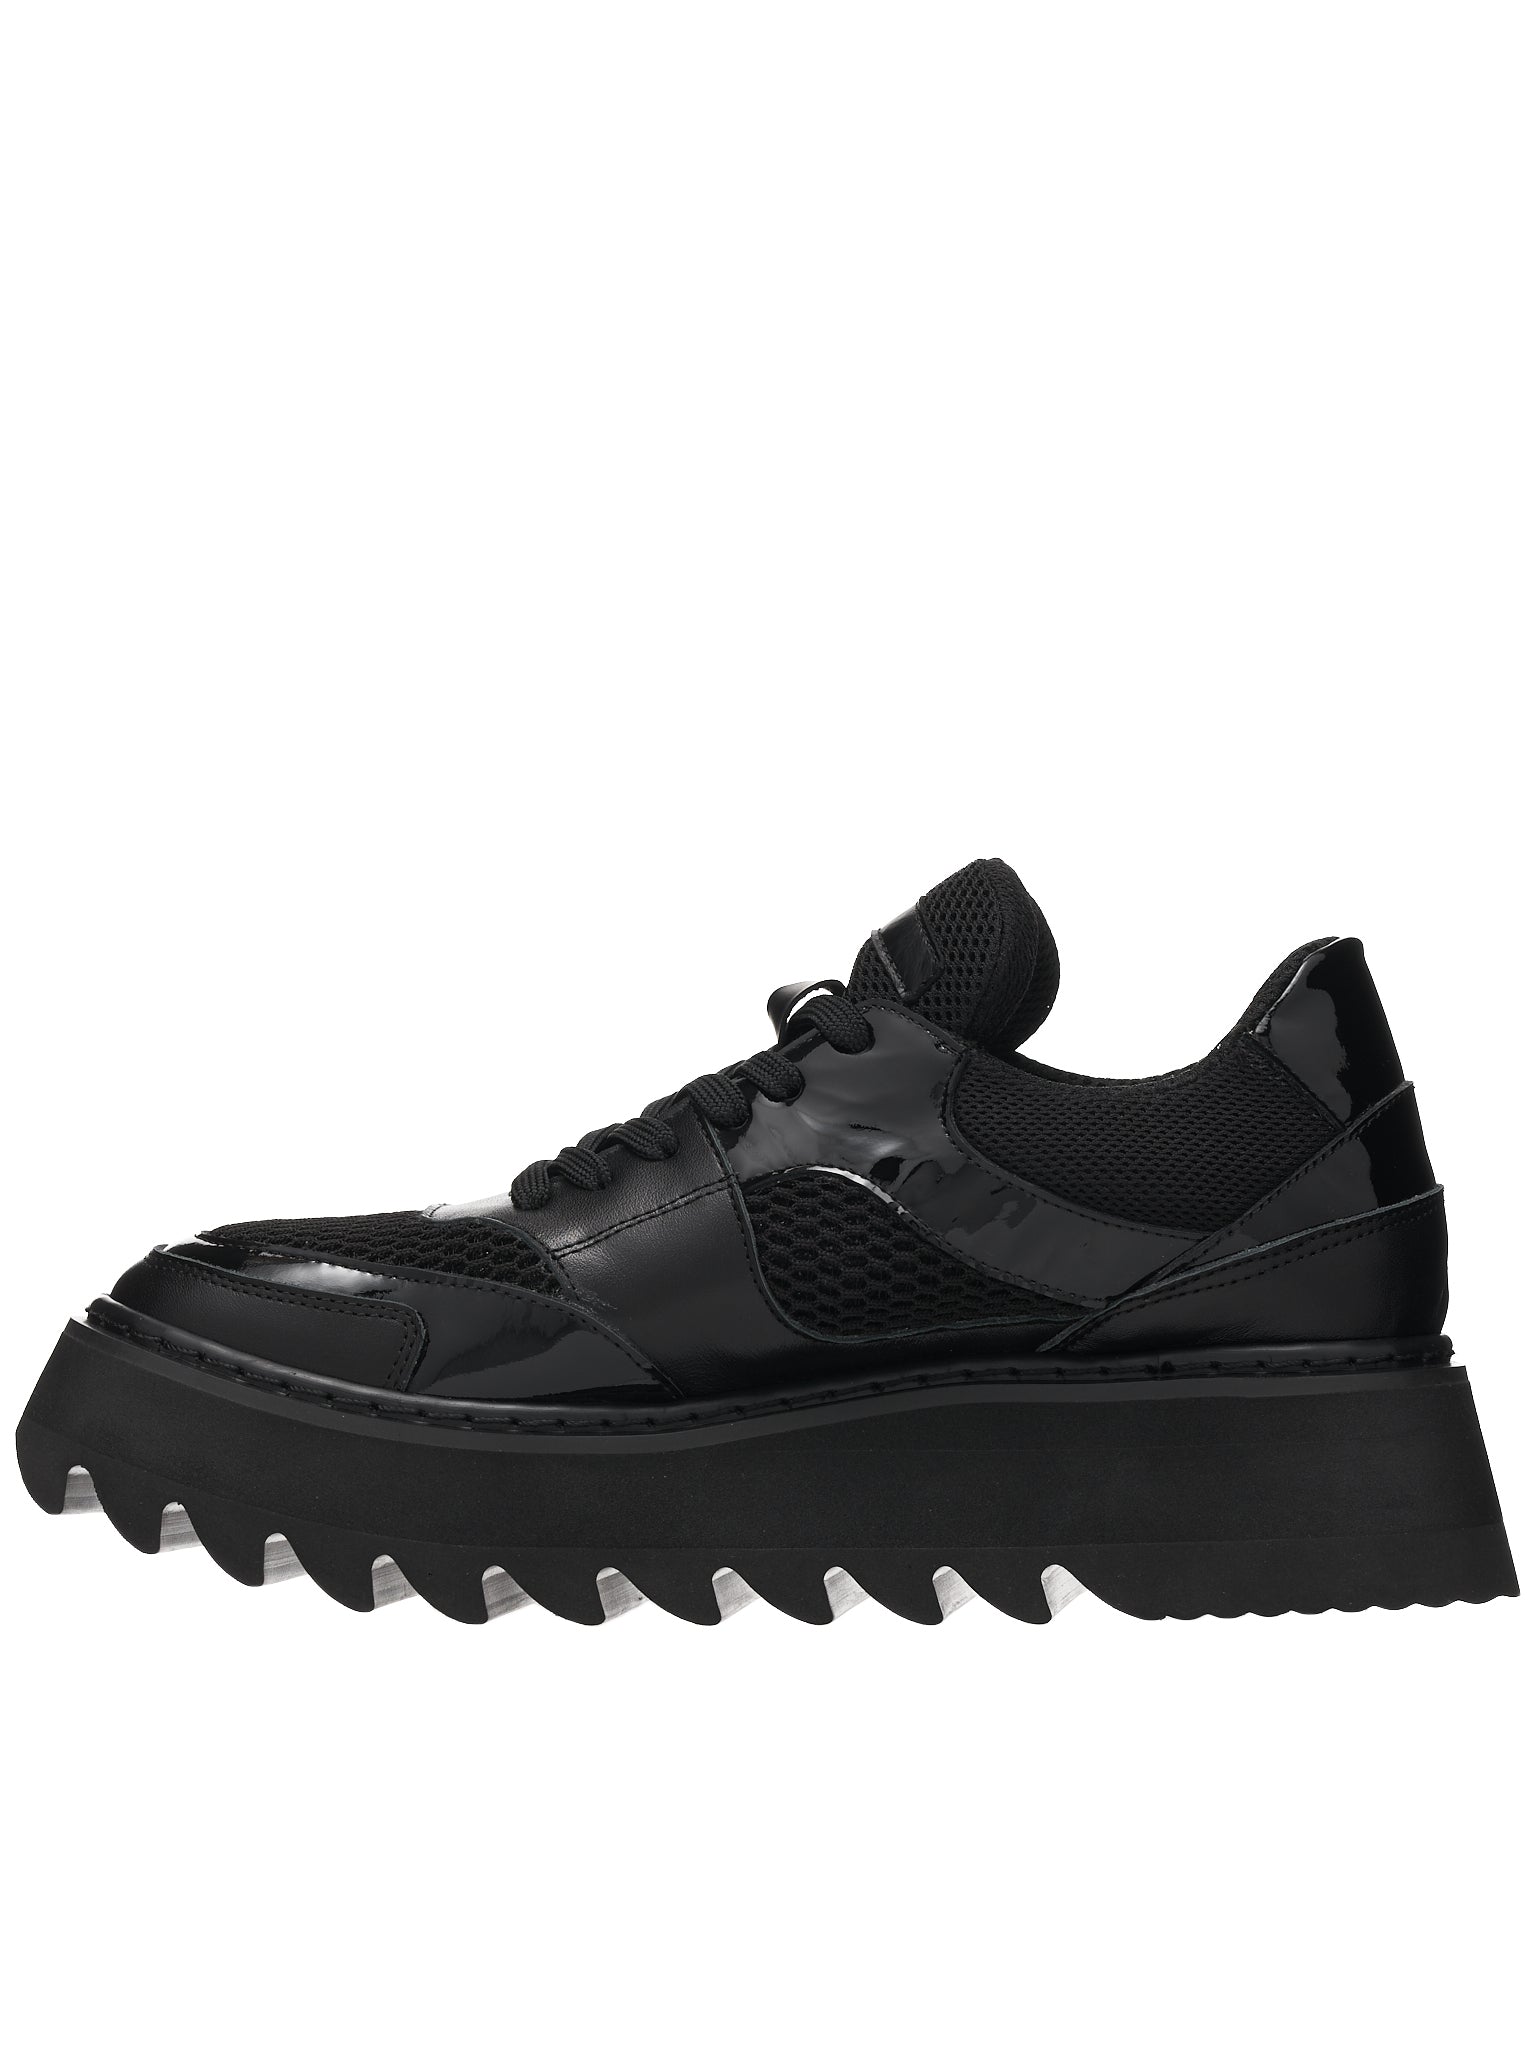 Platform Sneakers (JJ-K107-001-BLACK-BLACK)